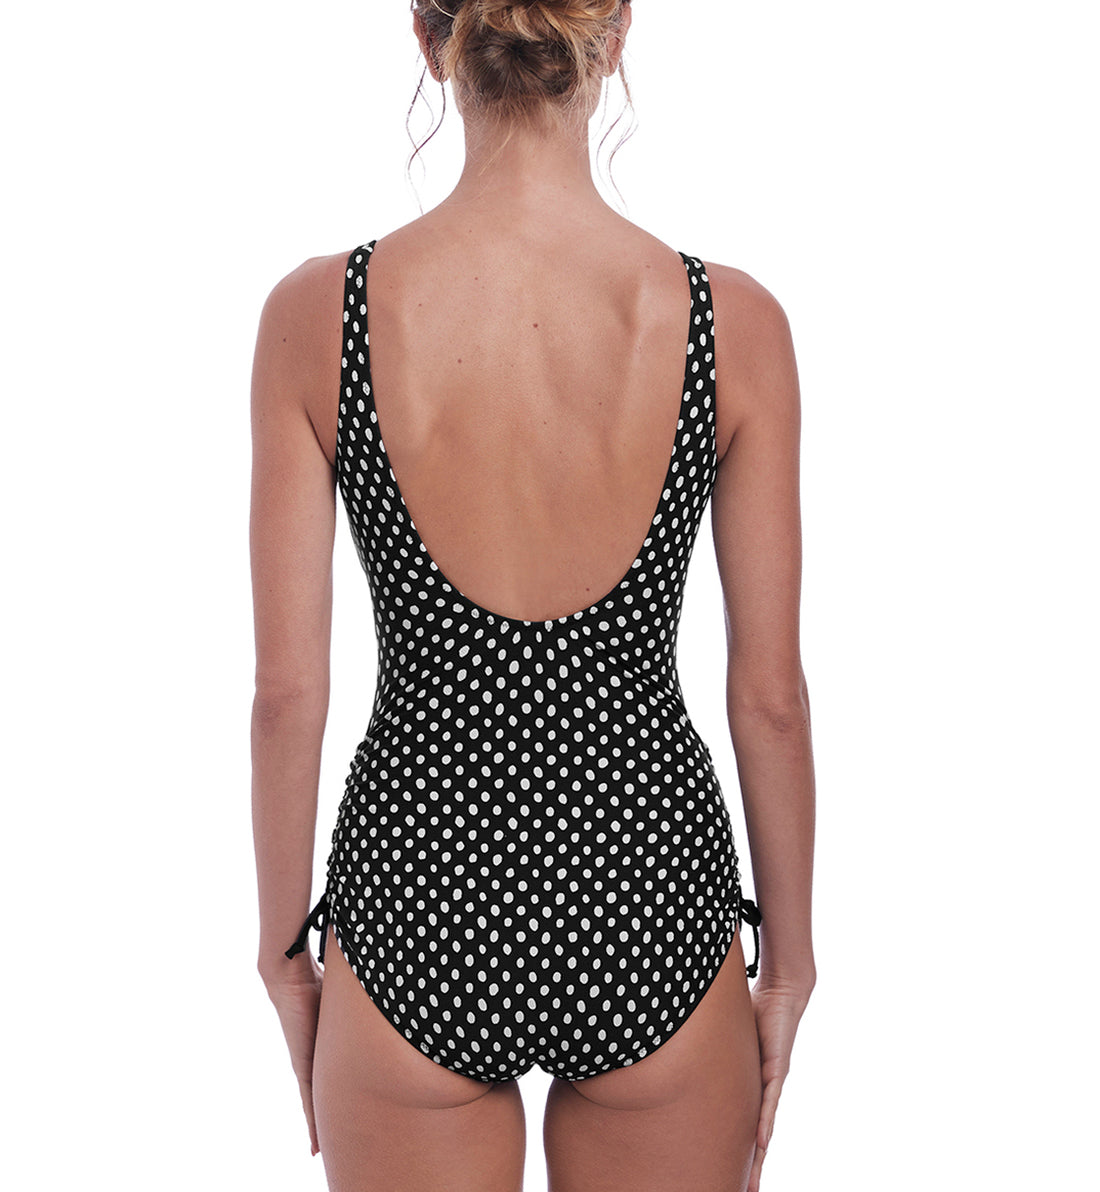 Fantasie Santa Monica V-Neck Underwire Adjustable Leg Swimsuit (6729),34E,Blk/Wht - Black/White,34E